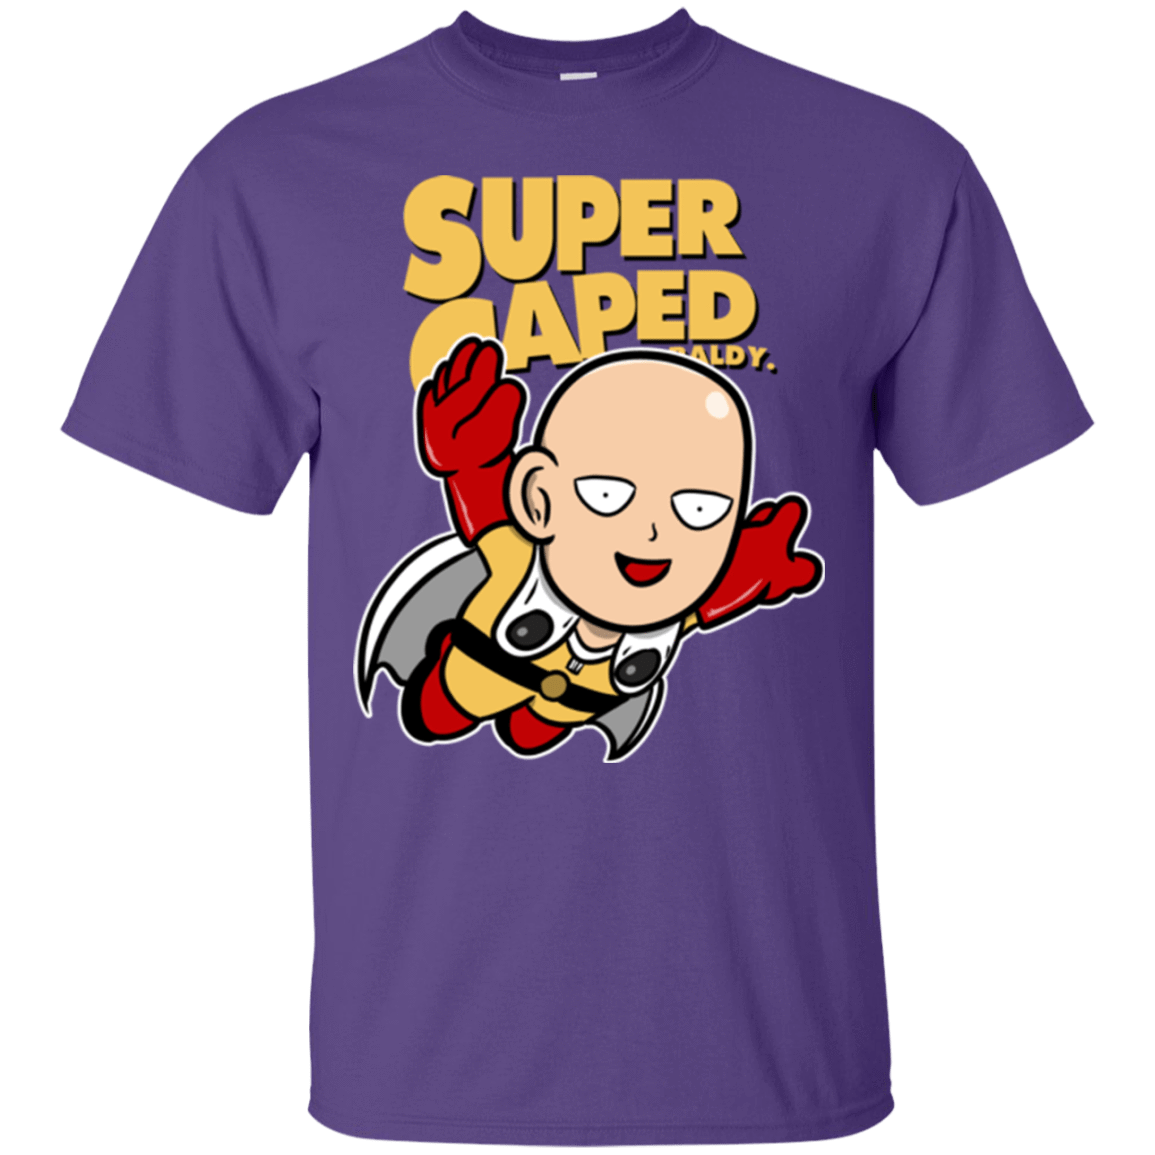 T-Shirts Purple / Small Super Caped Baldy (1) T-Shirt